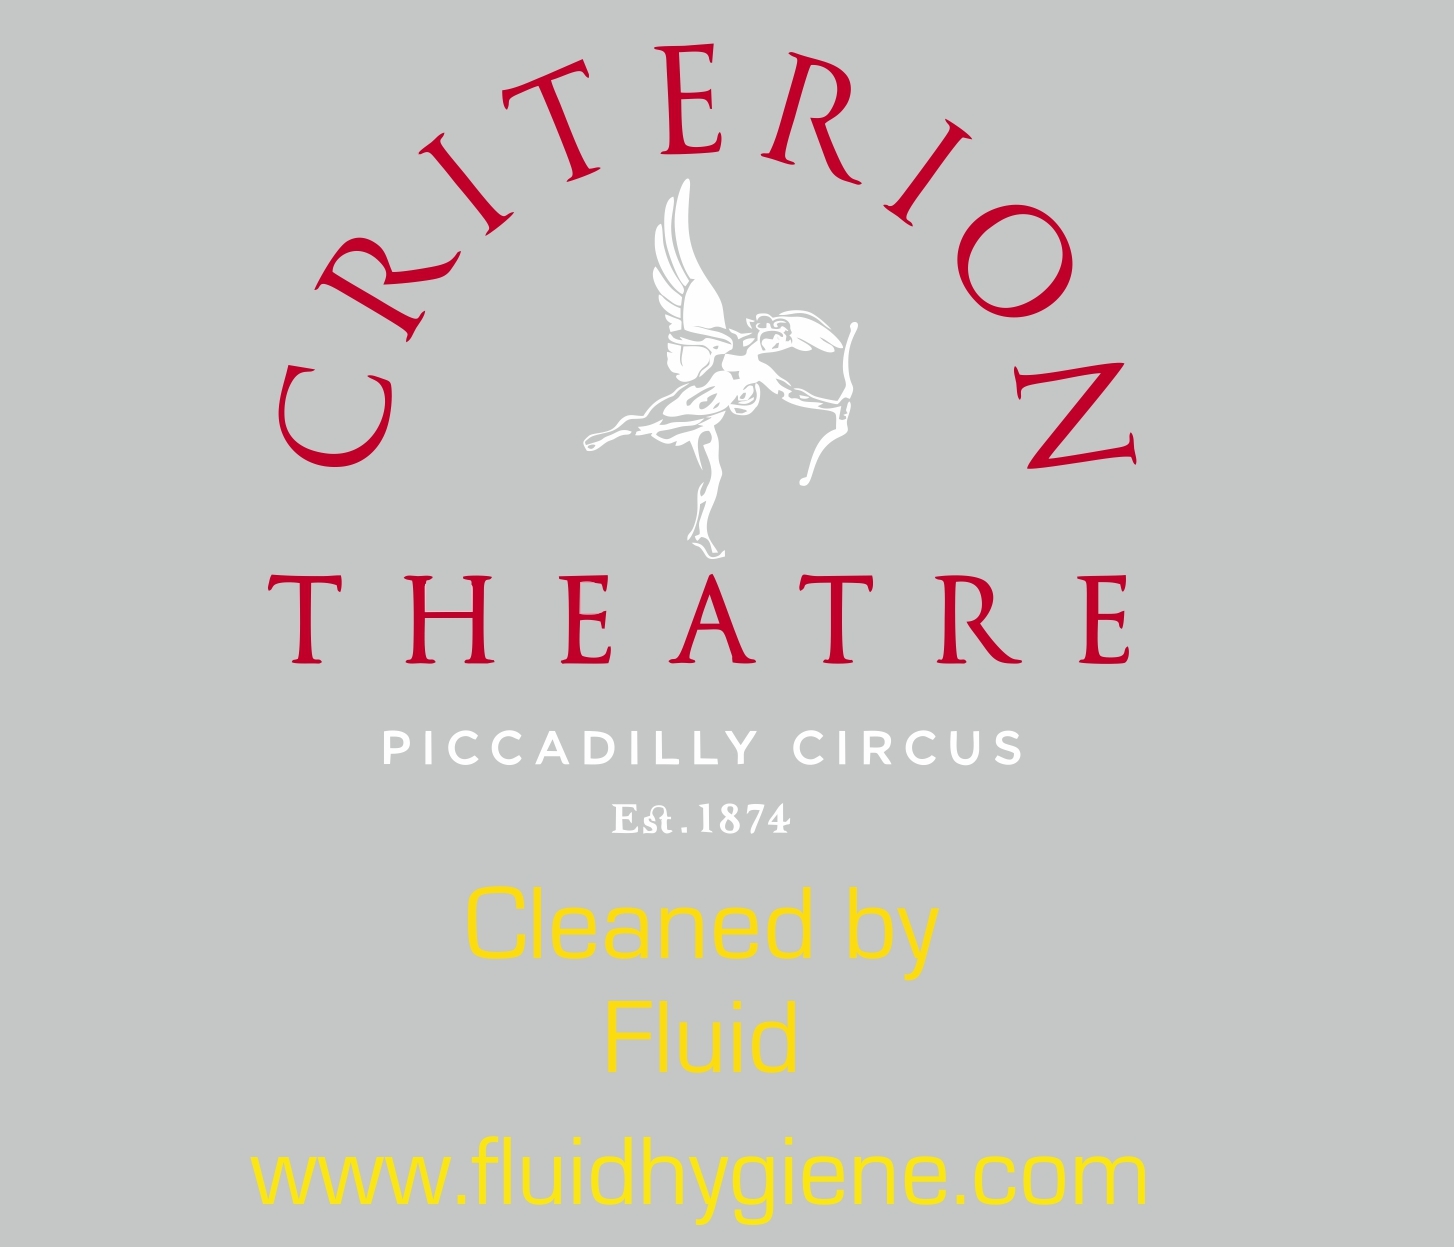 Criterion_Theatre.jpg